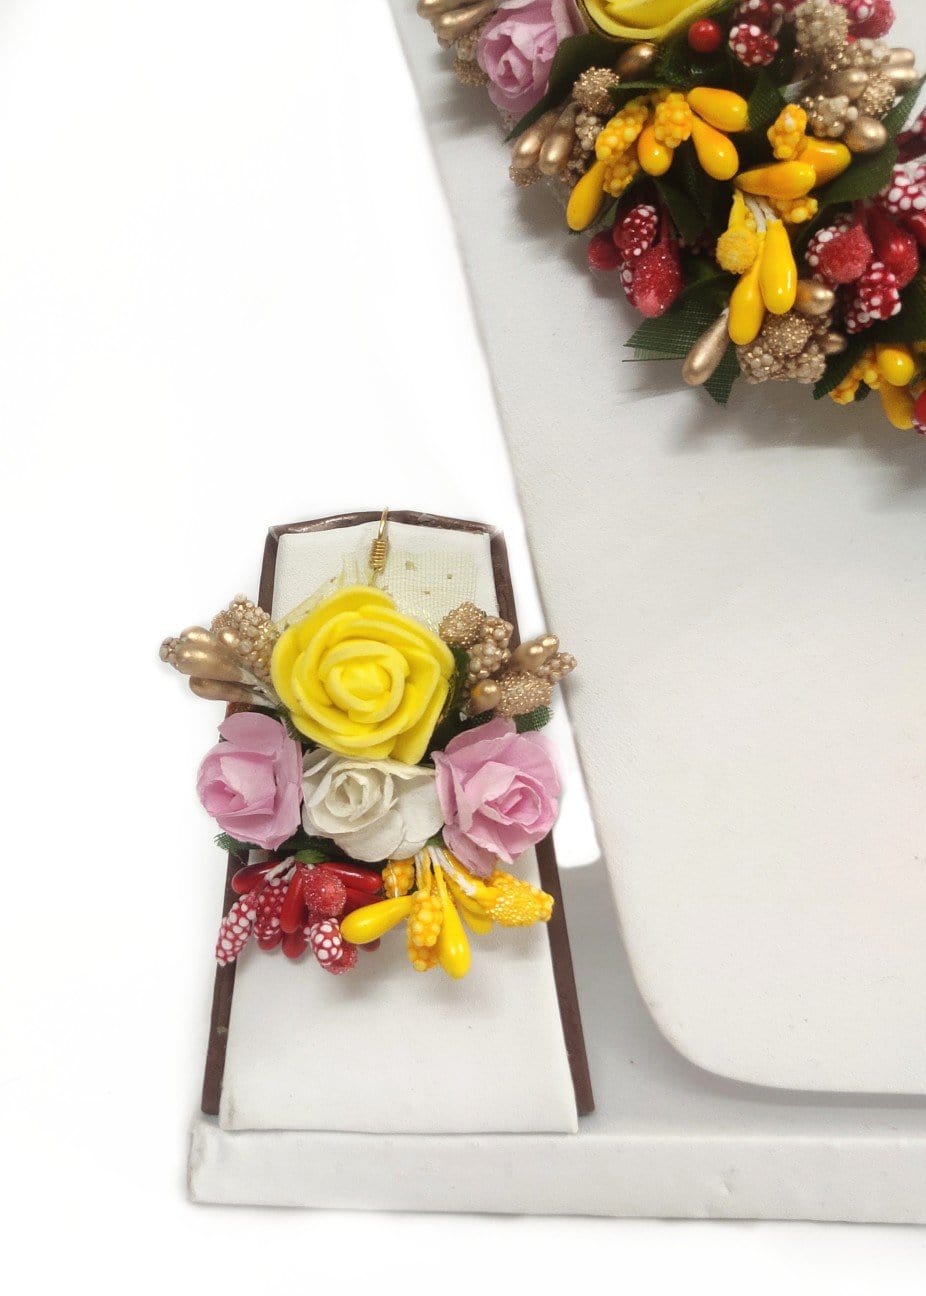 Lamansh Flower Jewellery Set 1 Necklace, 2 Earrings & 1 Maangtika set / Red-Yellow-Golden LAMANSH® Handmade Flower Jewellery Set For Women & Girls / Haldi Set